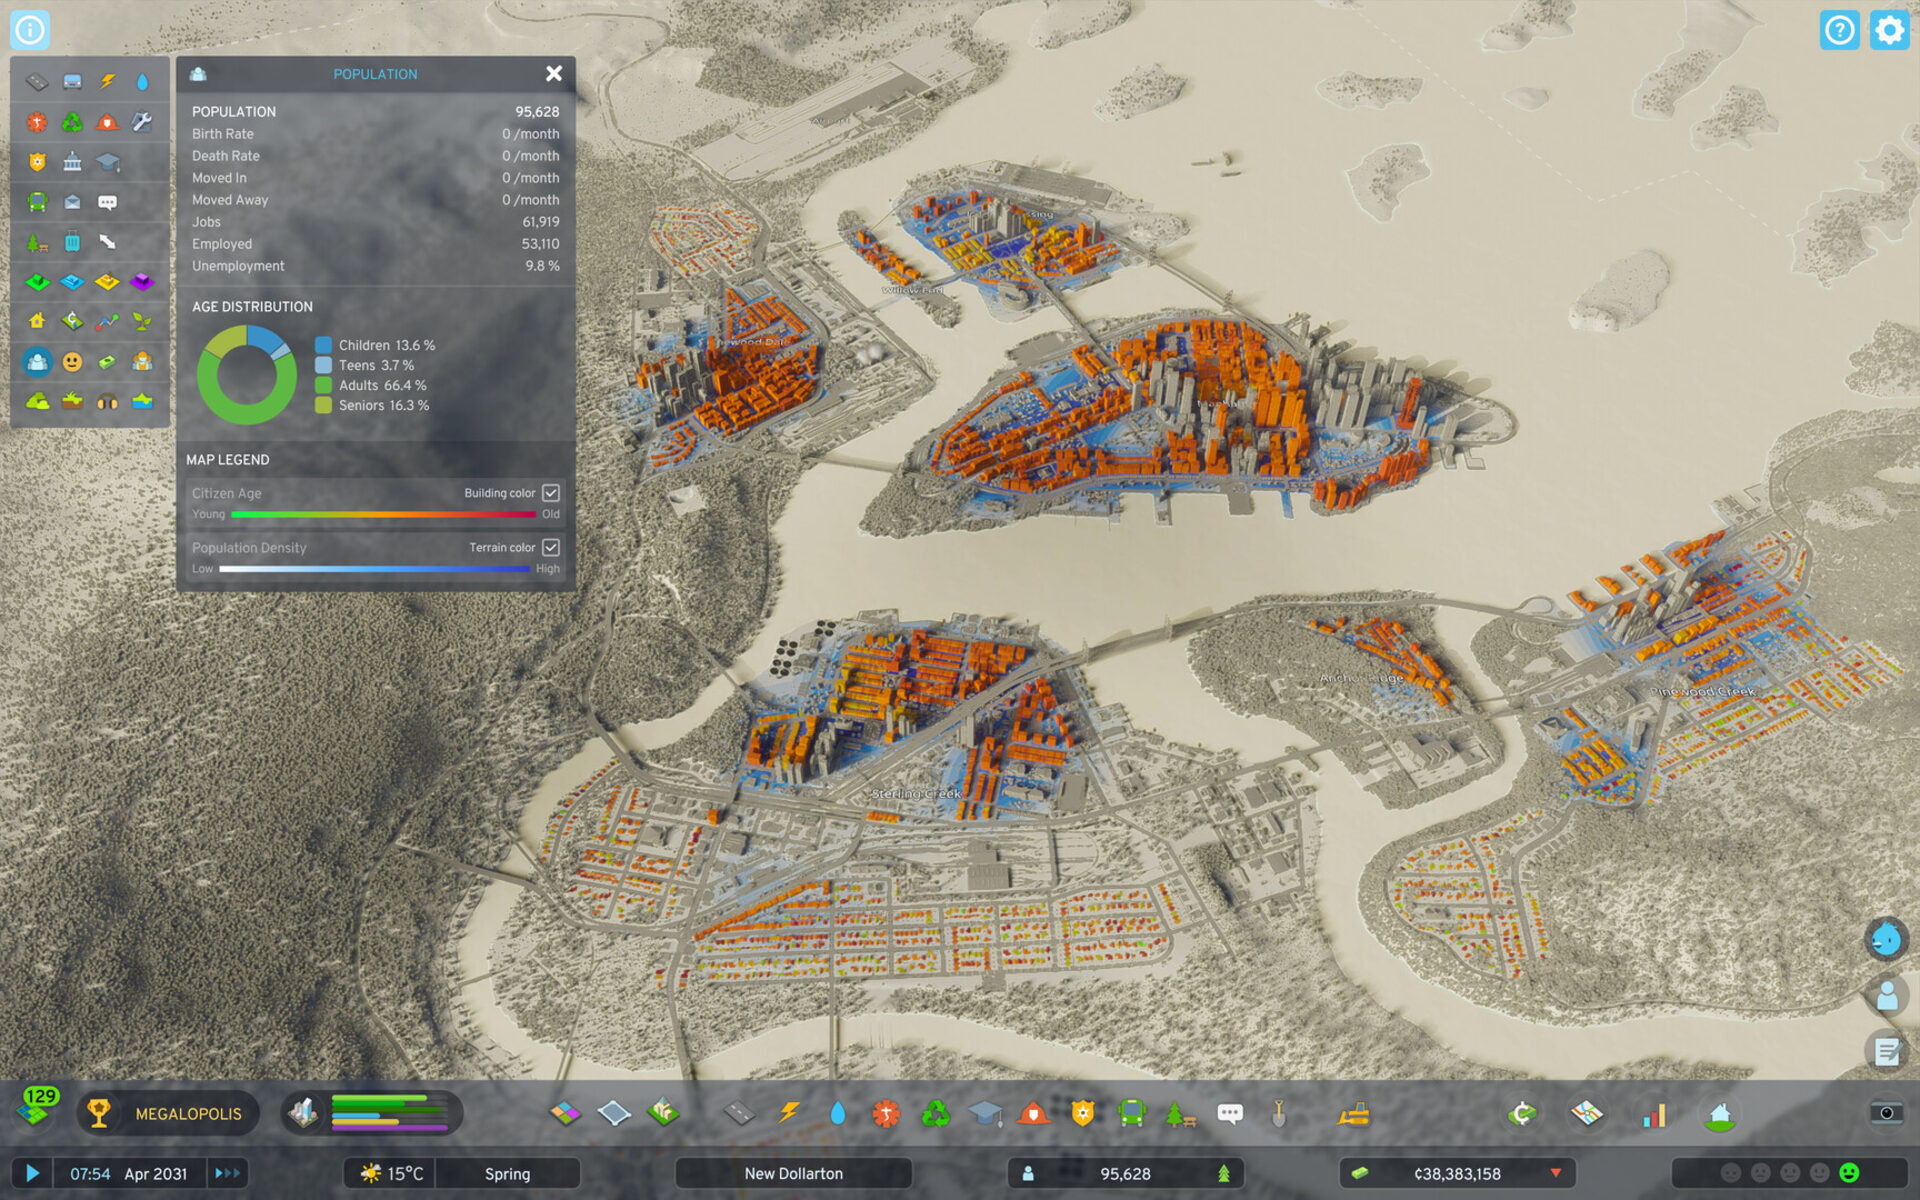 Cities: Skylines II Ultimate Edition Steam Offline - Nadex Games